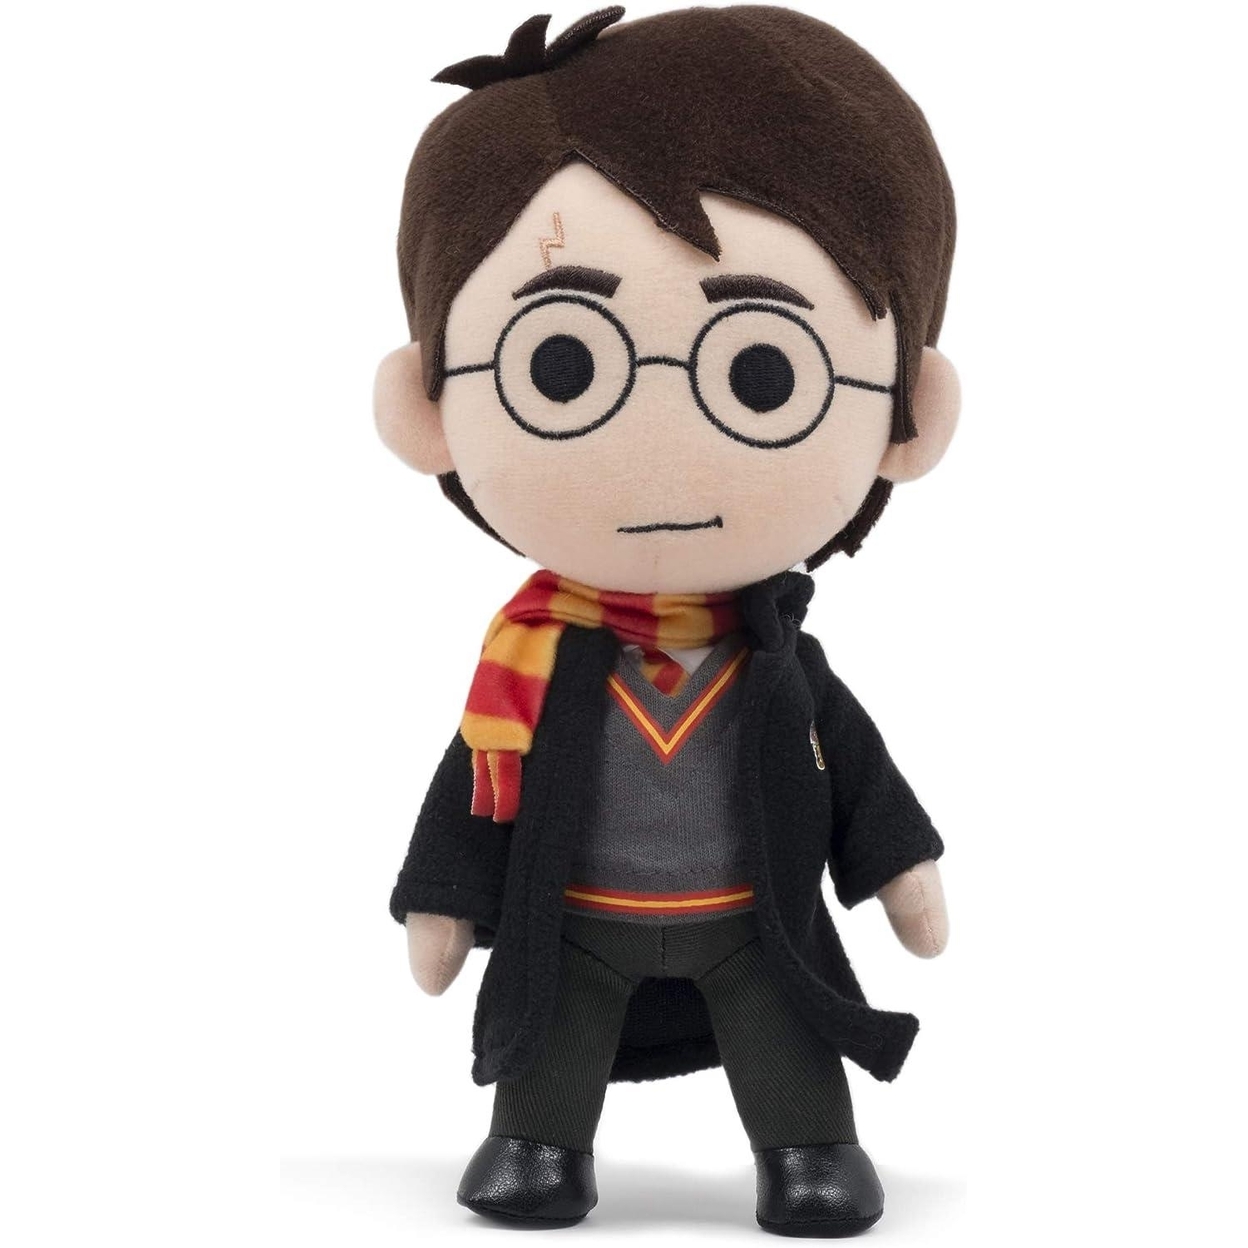 Harry Potter Q-Pal Plush Figure Toy 9 Gryffindor Scarf Sweater Collectible Quantum Mechanix